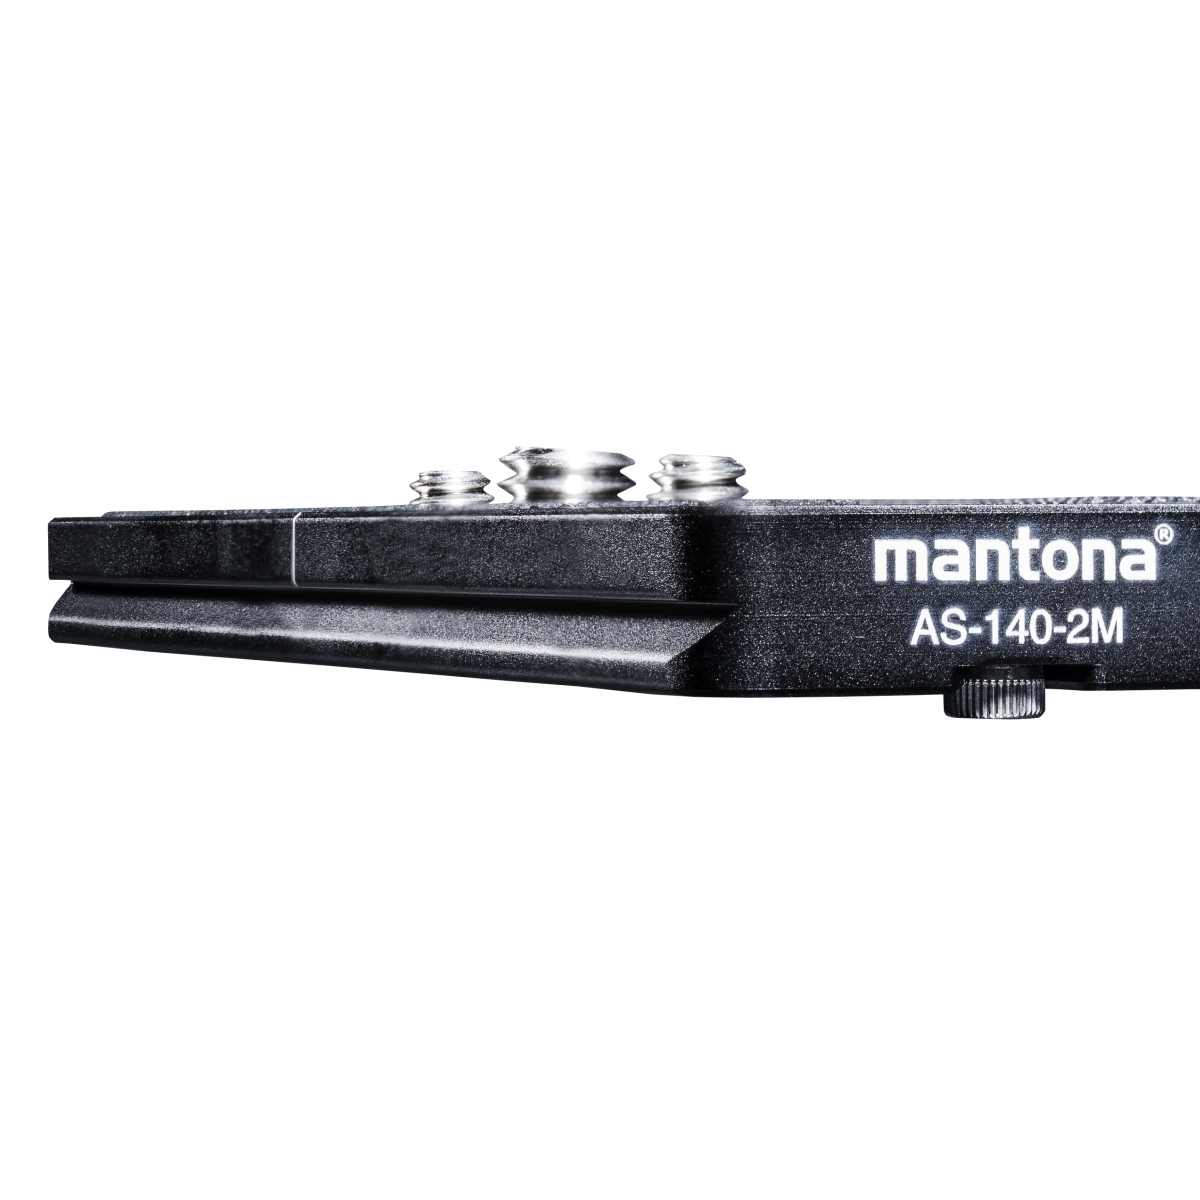 Mantona AS-140-2M quick release plate